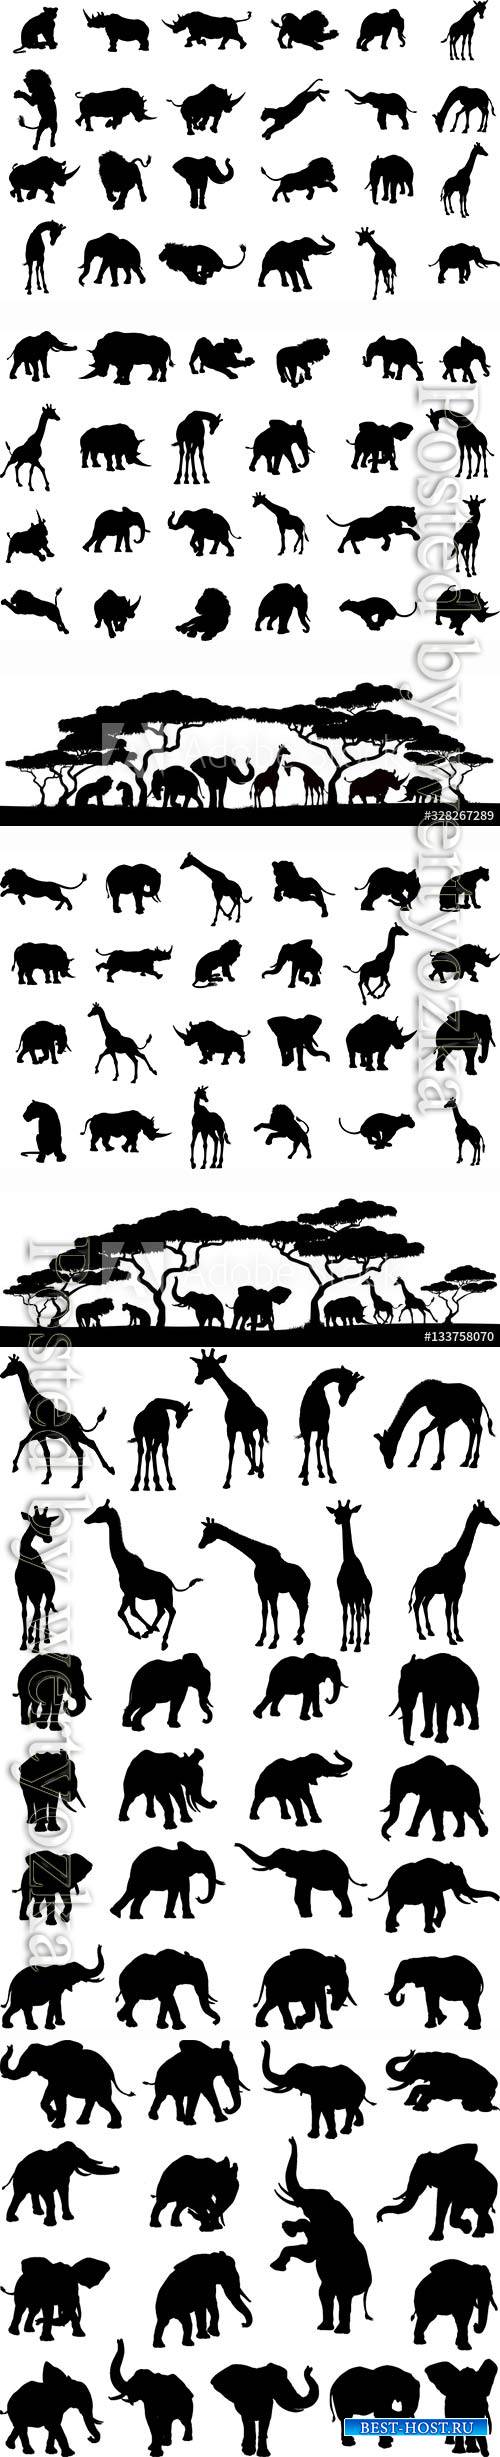 Silhouettes of animals in vector, elephant, giraffe, lion, rhino, leopard